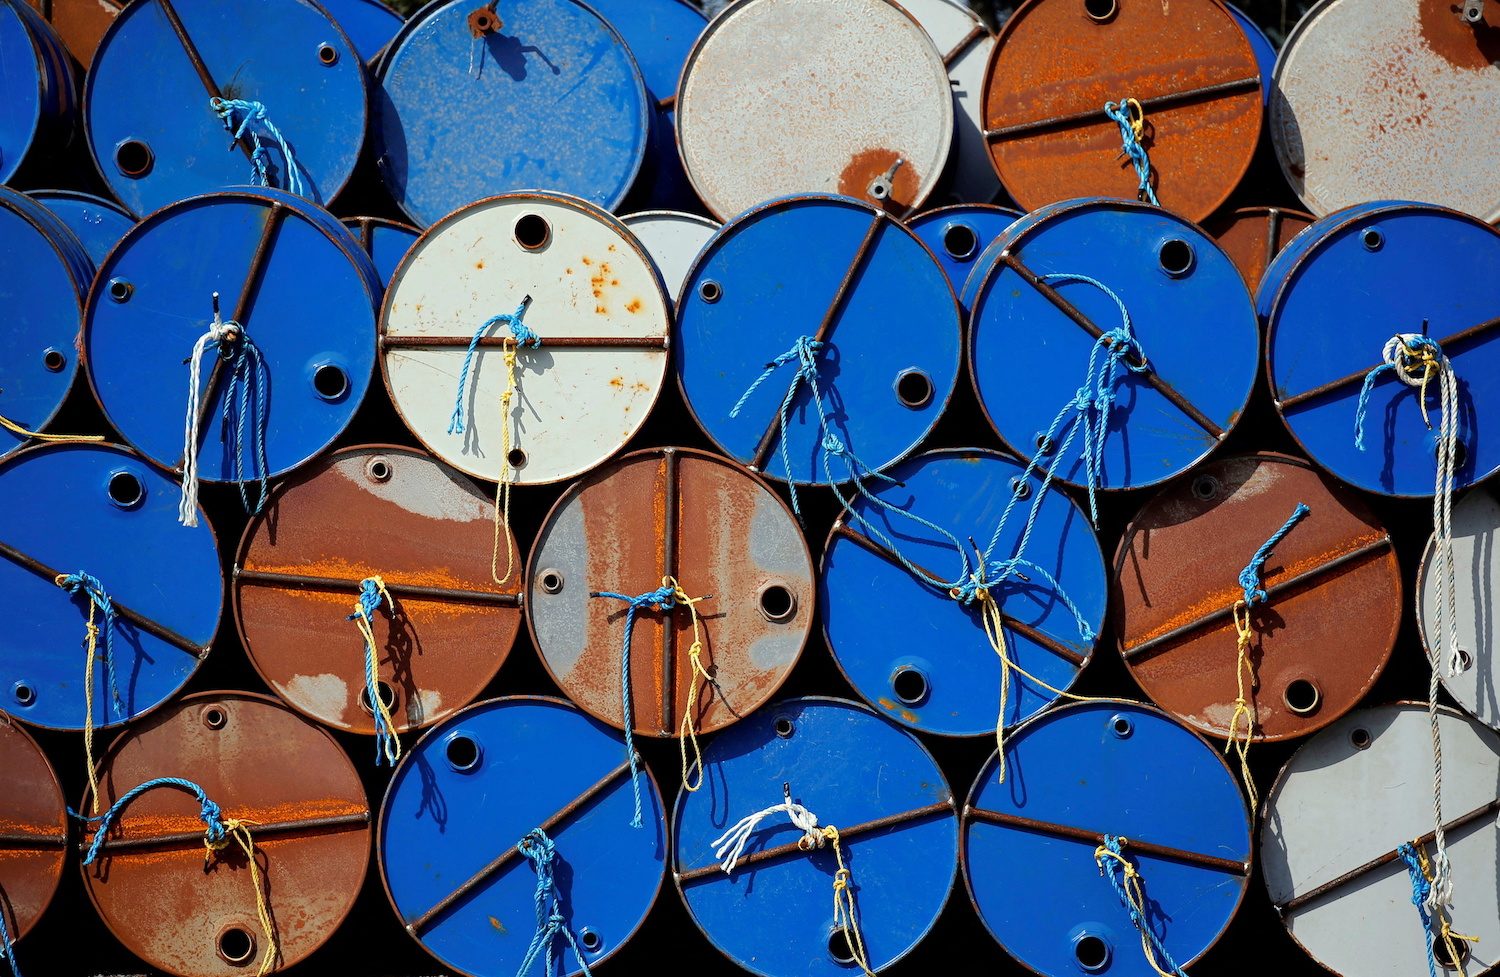 Oil blasts through $110 per barrel, as few alternatives seen to Russian supply